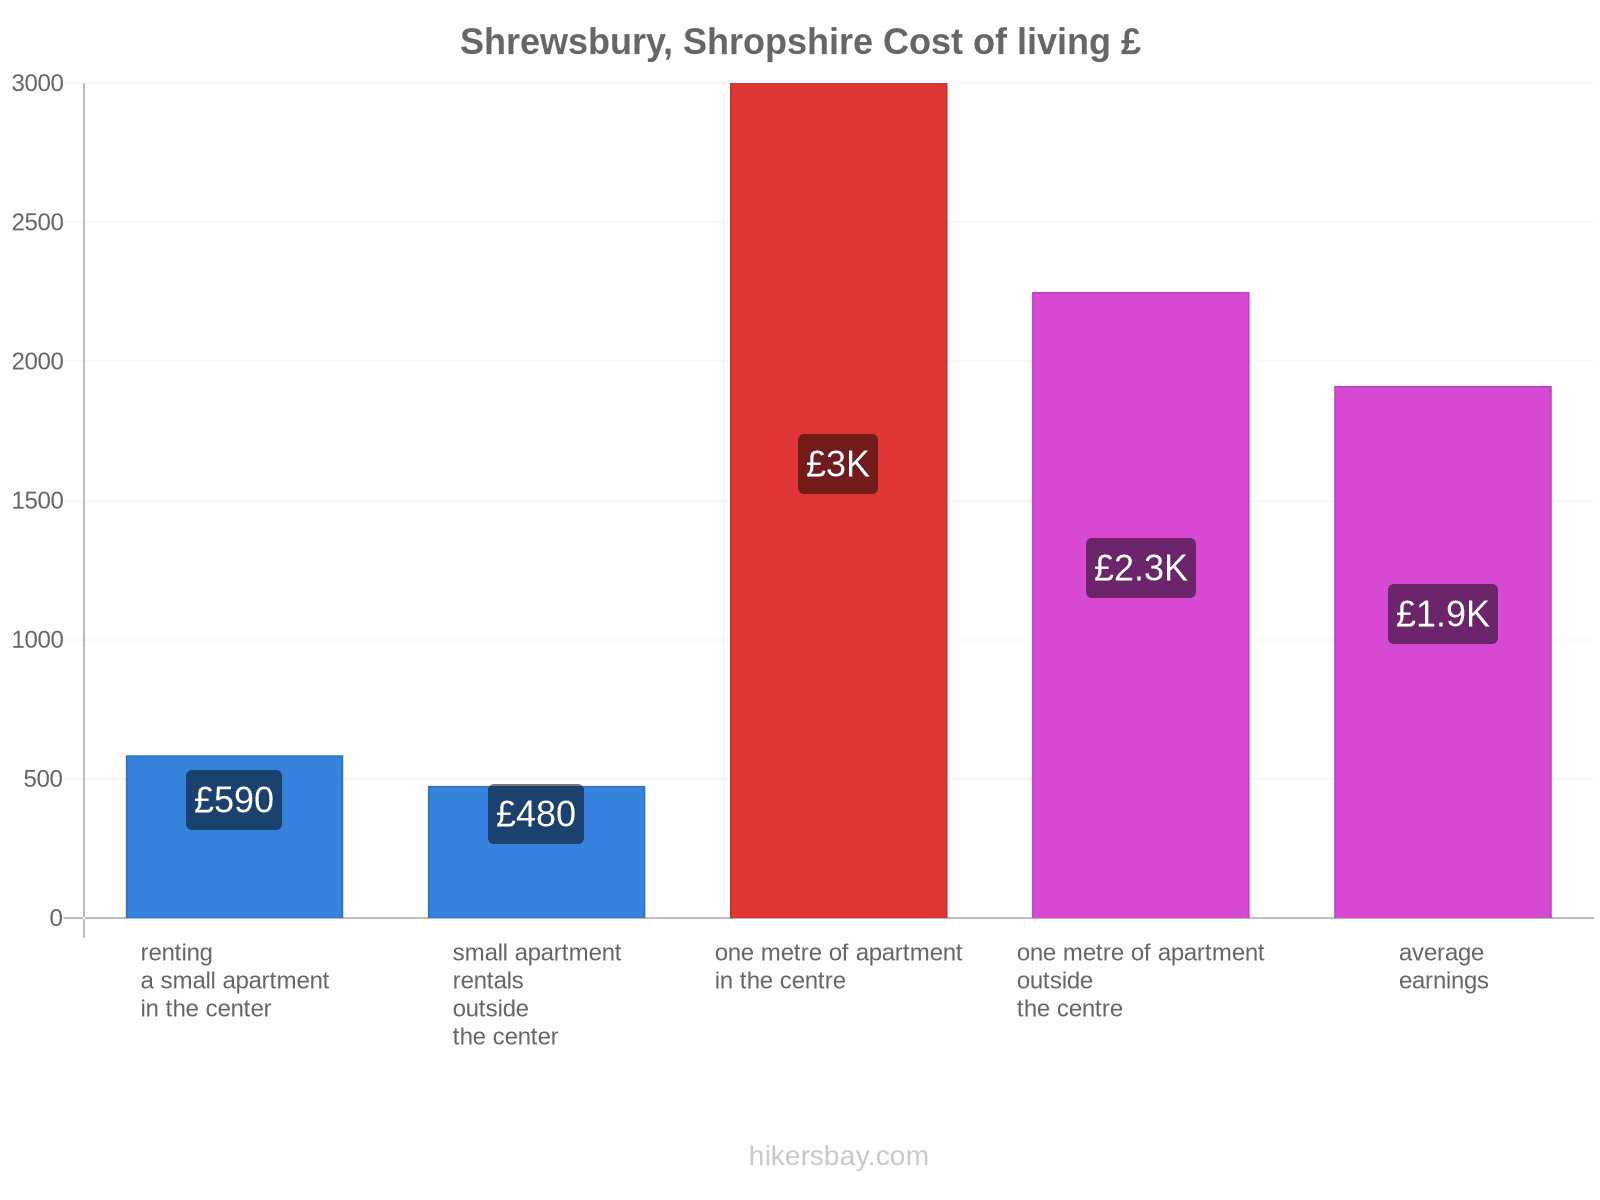 Shrewsbury, Shropshire cost of living hikersbay.com